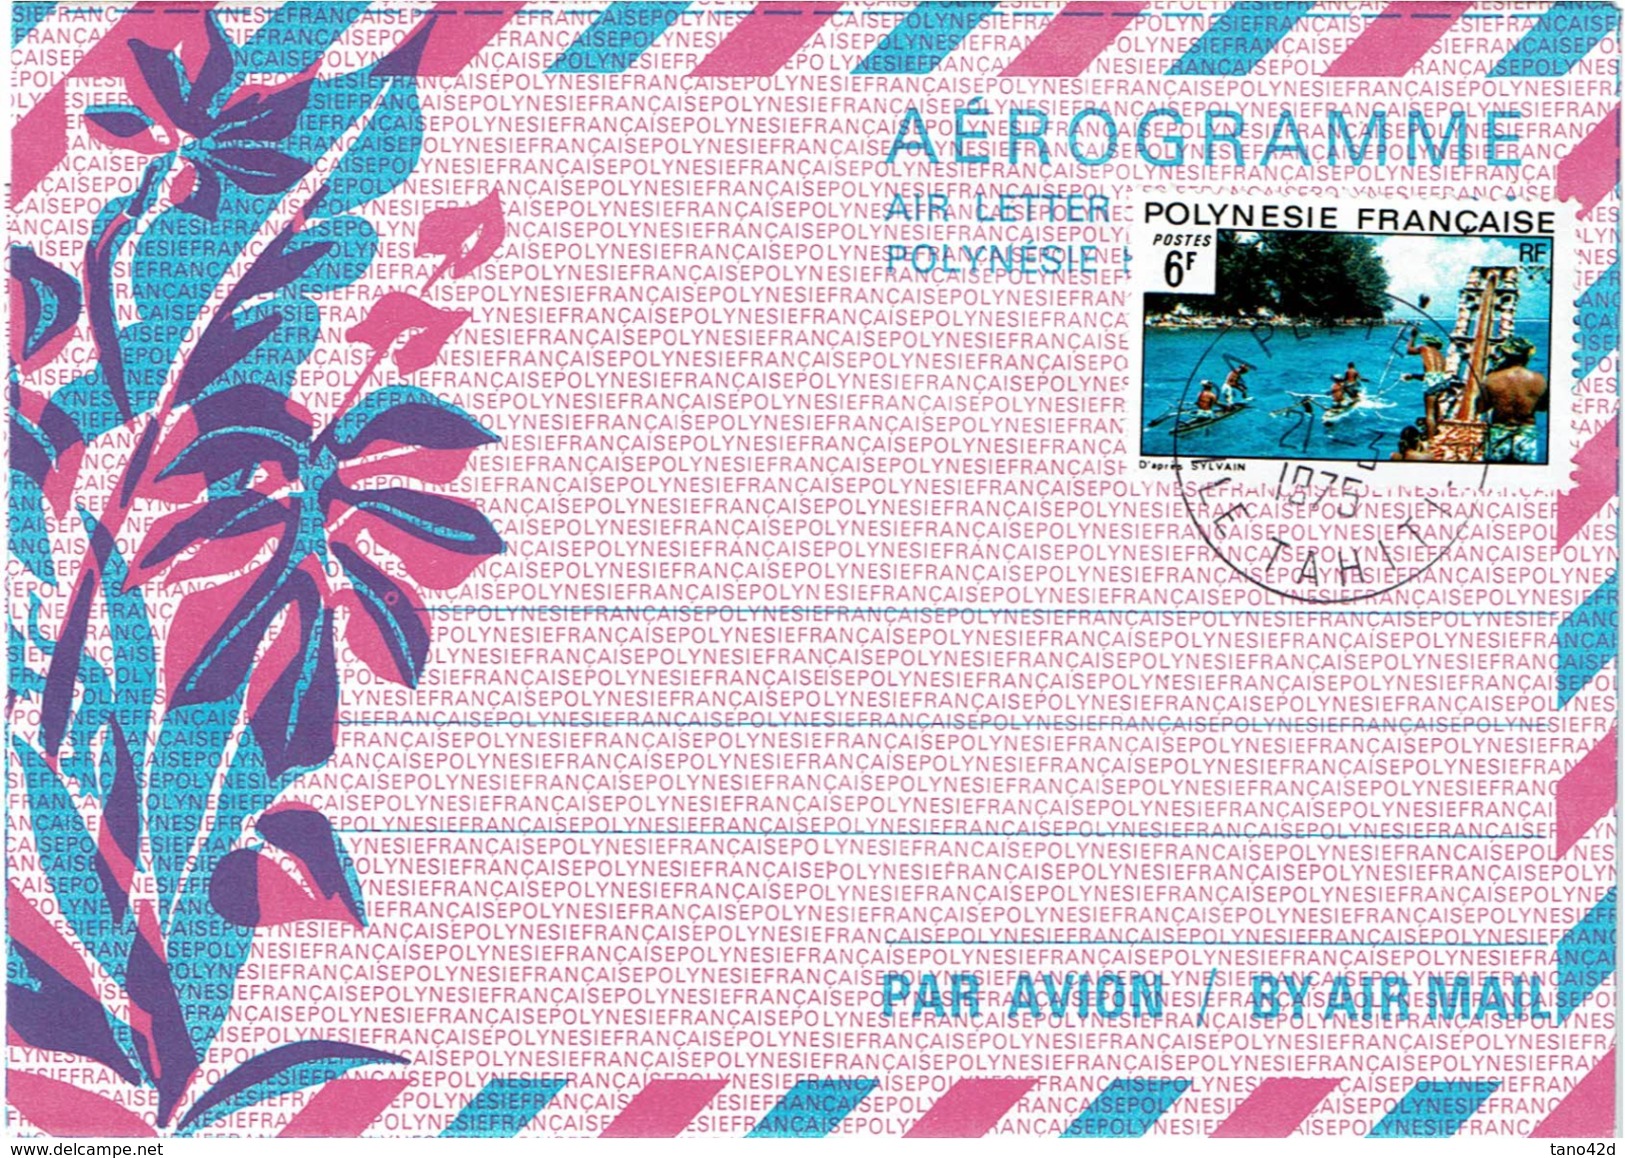 REF BR39 - POLYNESIE FRANCAISE - AEROGRAMME N°1 20F AVEC TPM 6F OBL. - Aerogrammi